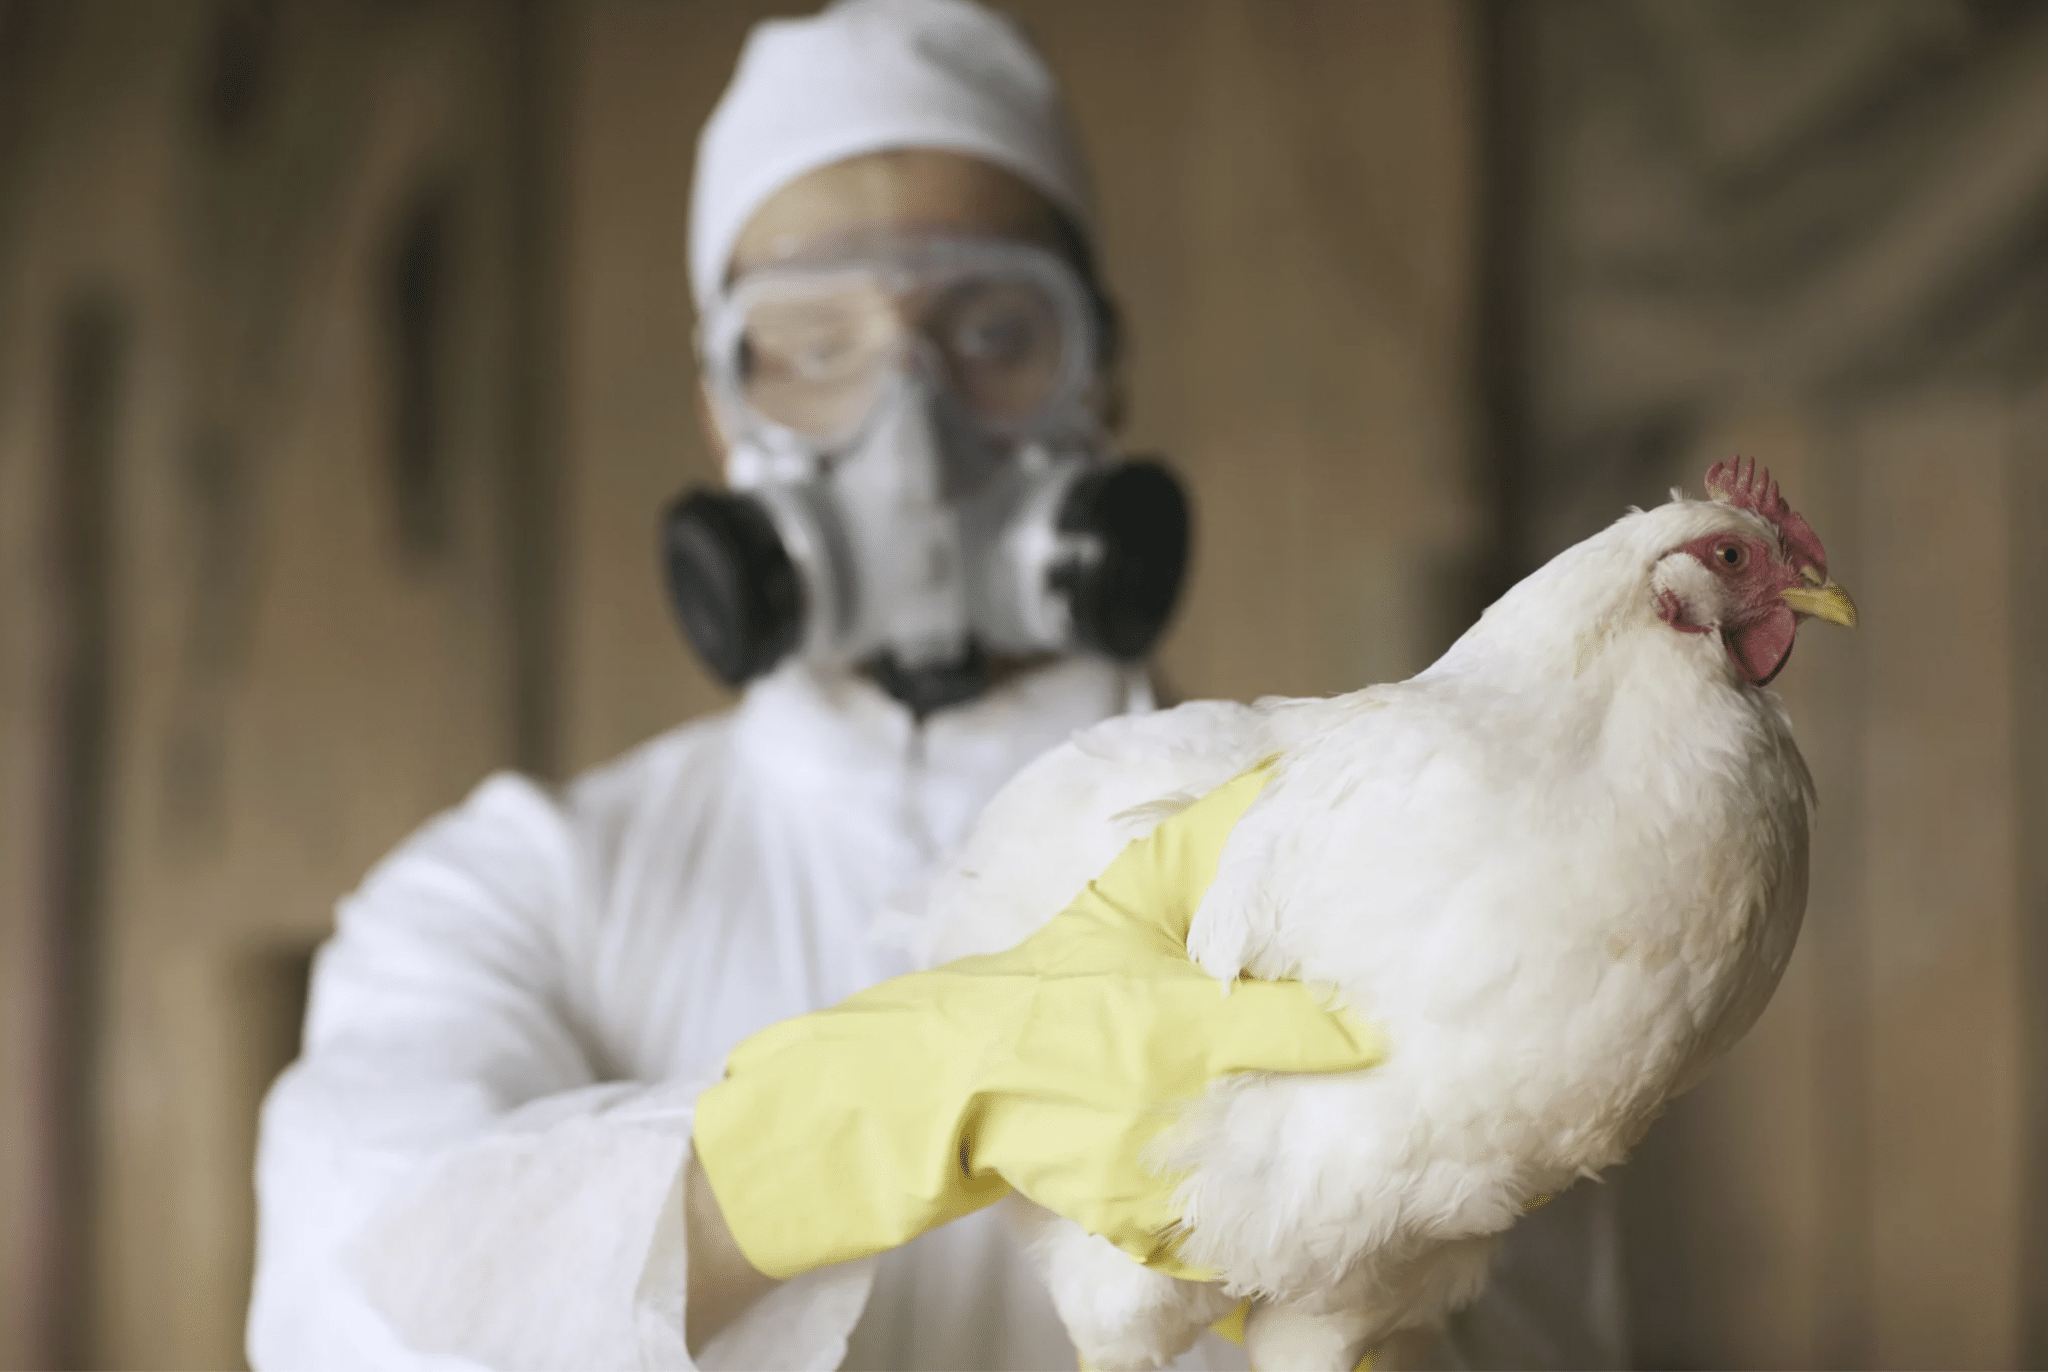 Nuova influenza aviaria